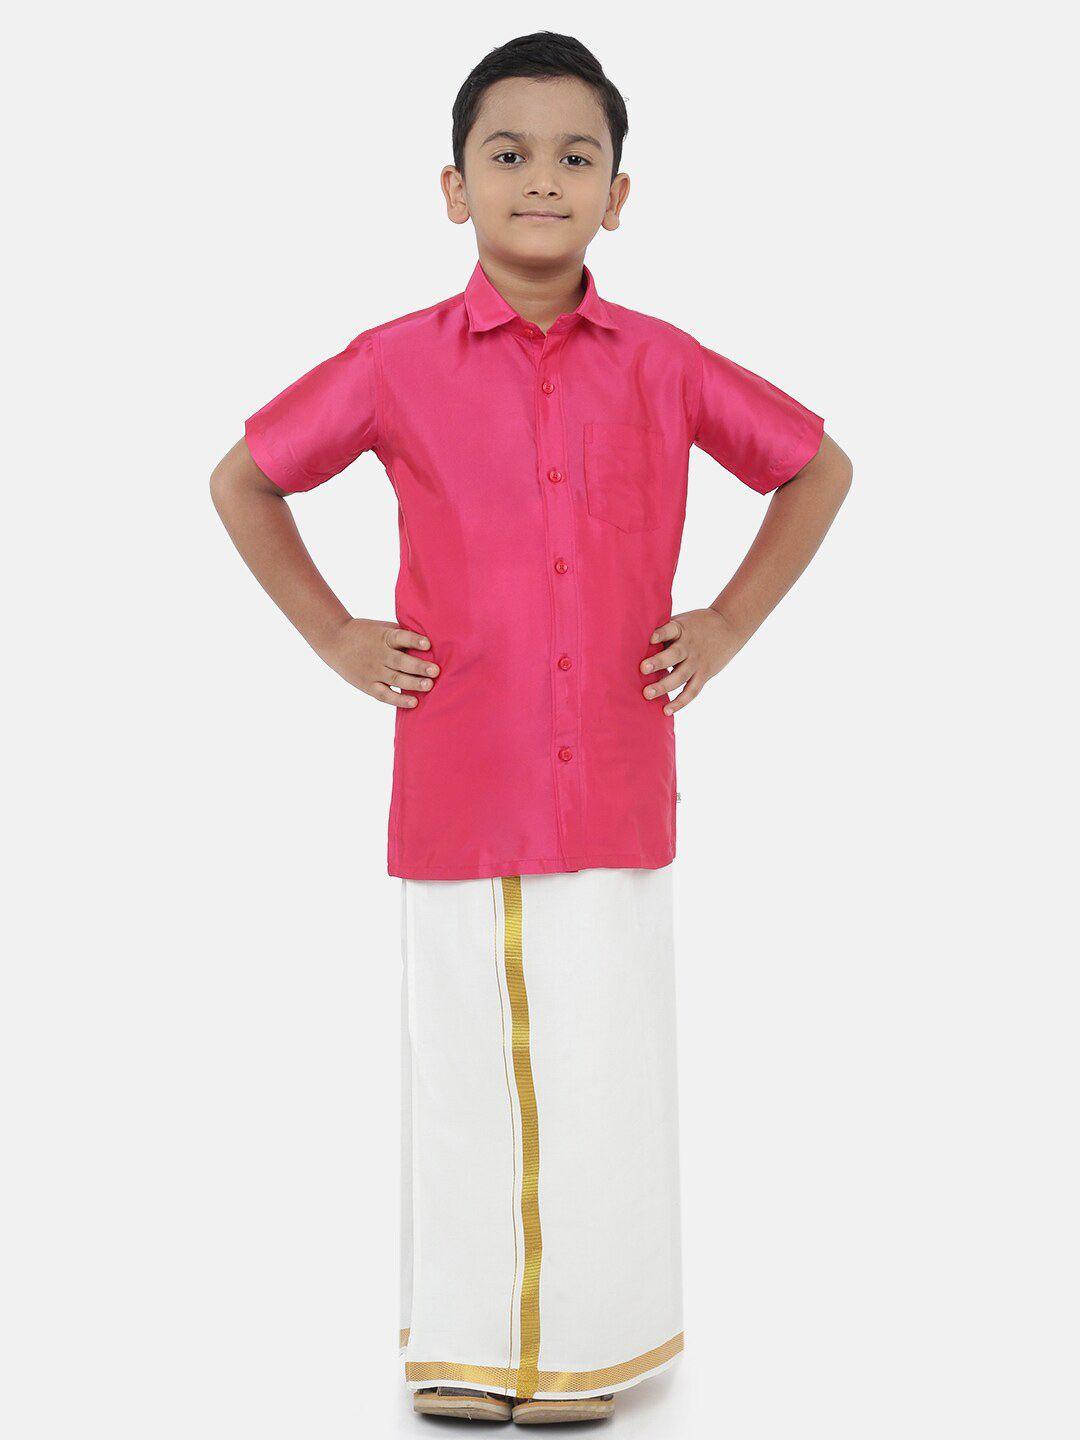 littlestars boys pink & white shirt with dhoti